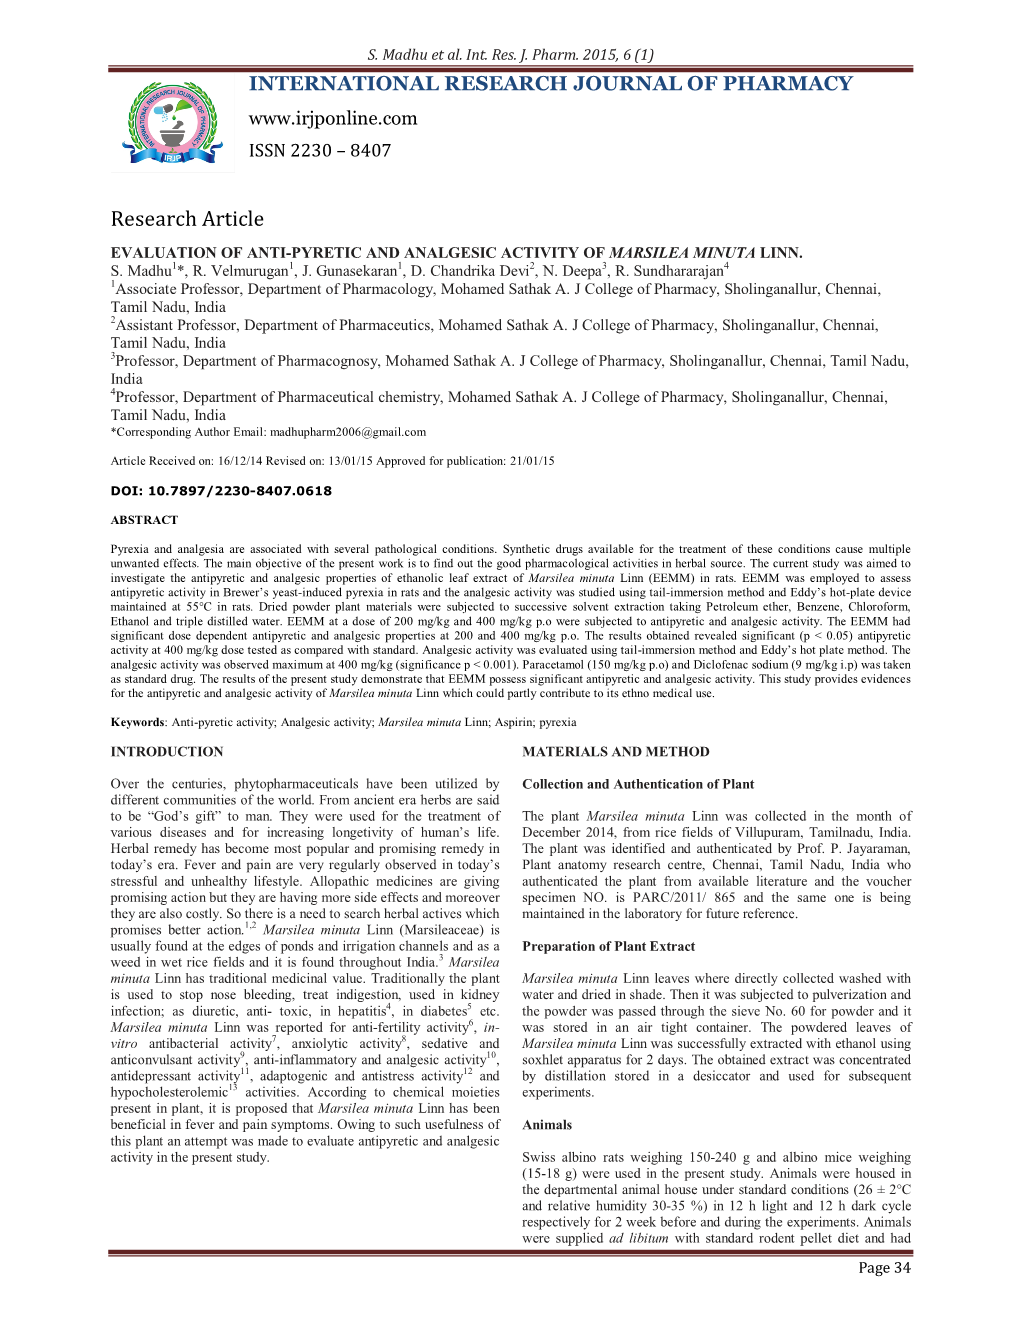 Evaluation of Anti-Pyretic and Analgesic Activity of Marsilea Minuta Linn